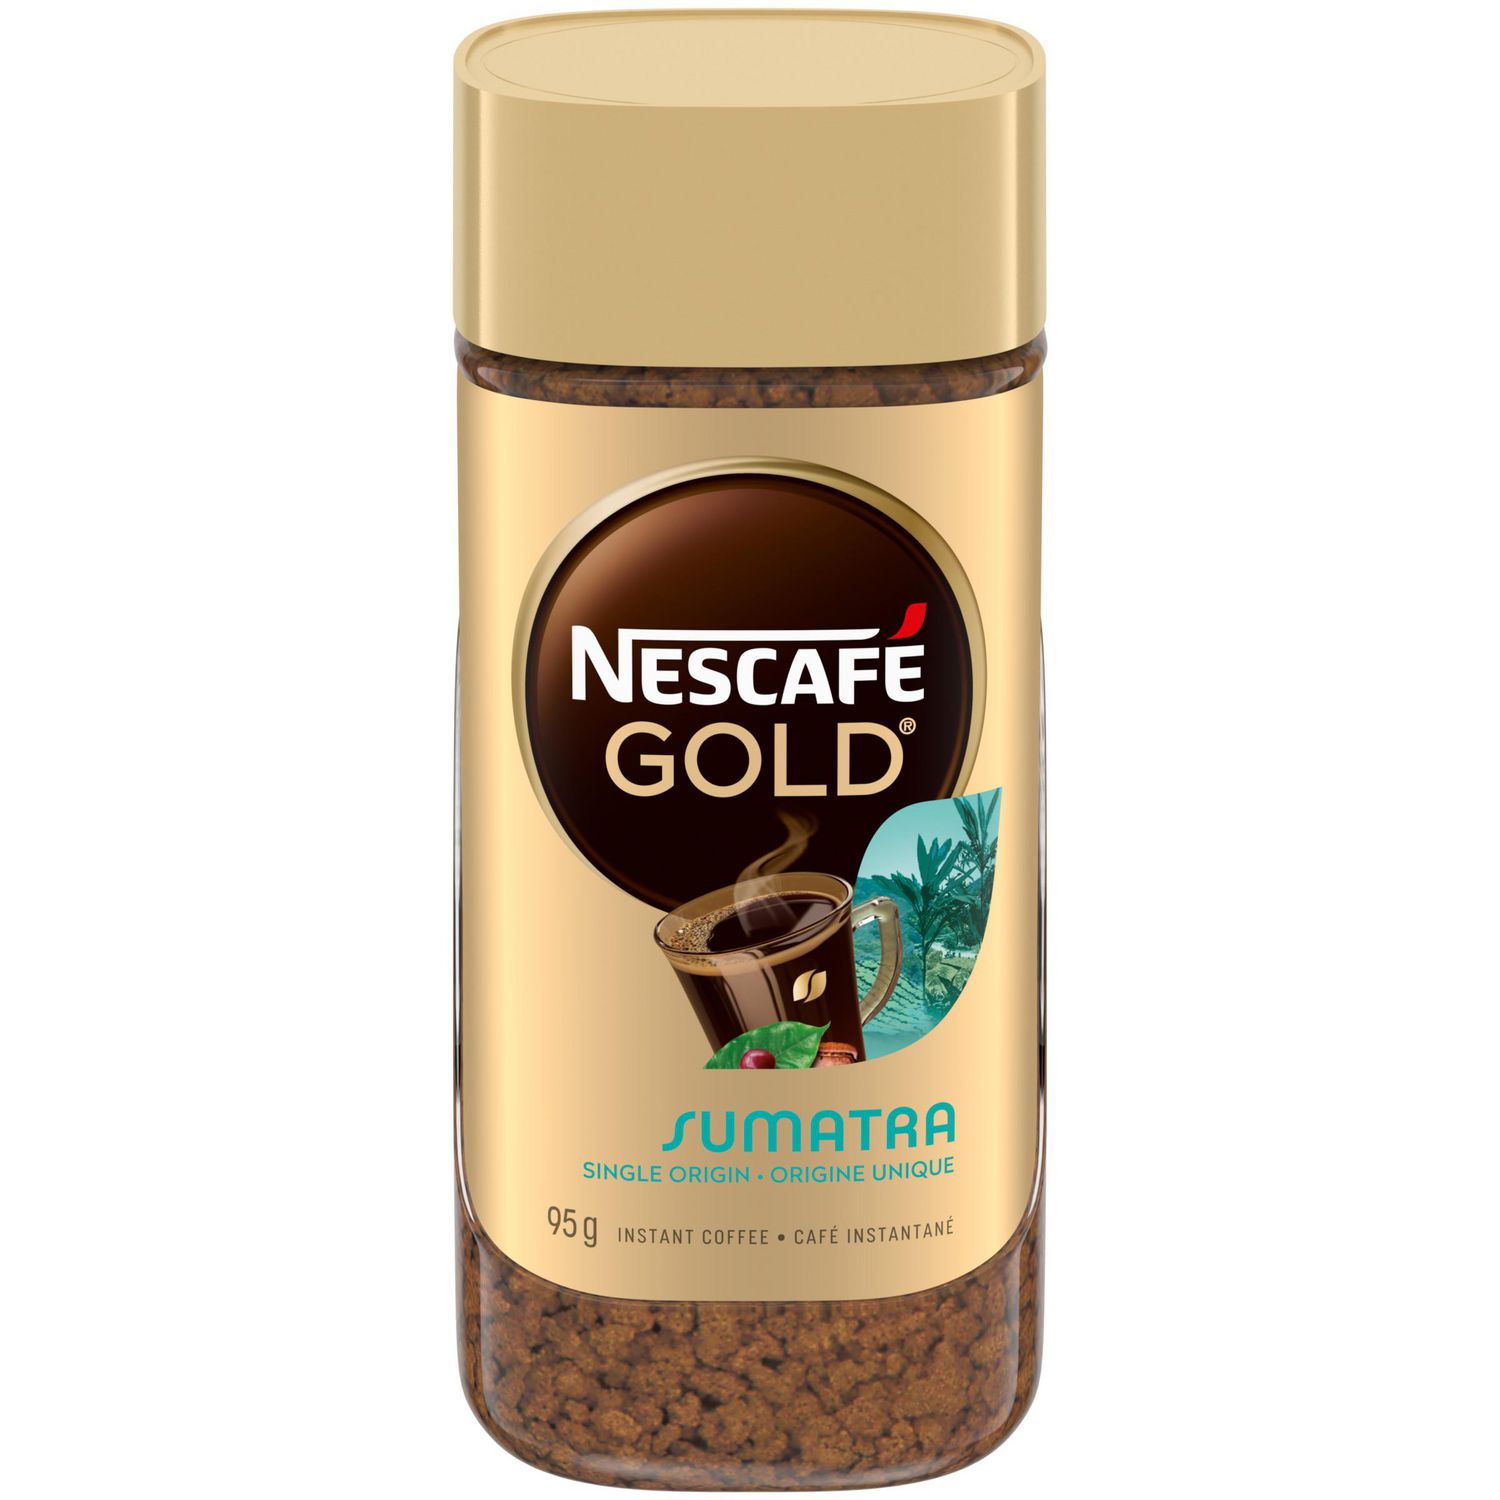 Origin gold. Нескафе Голд Суматра. Nescafe Gold Origins Sumatra. Nescafe Gold intenso. Nescafe Gold Aroma.